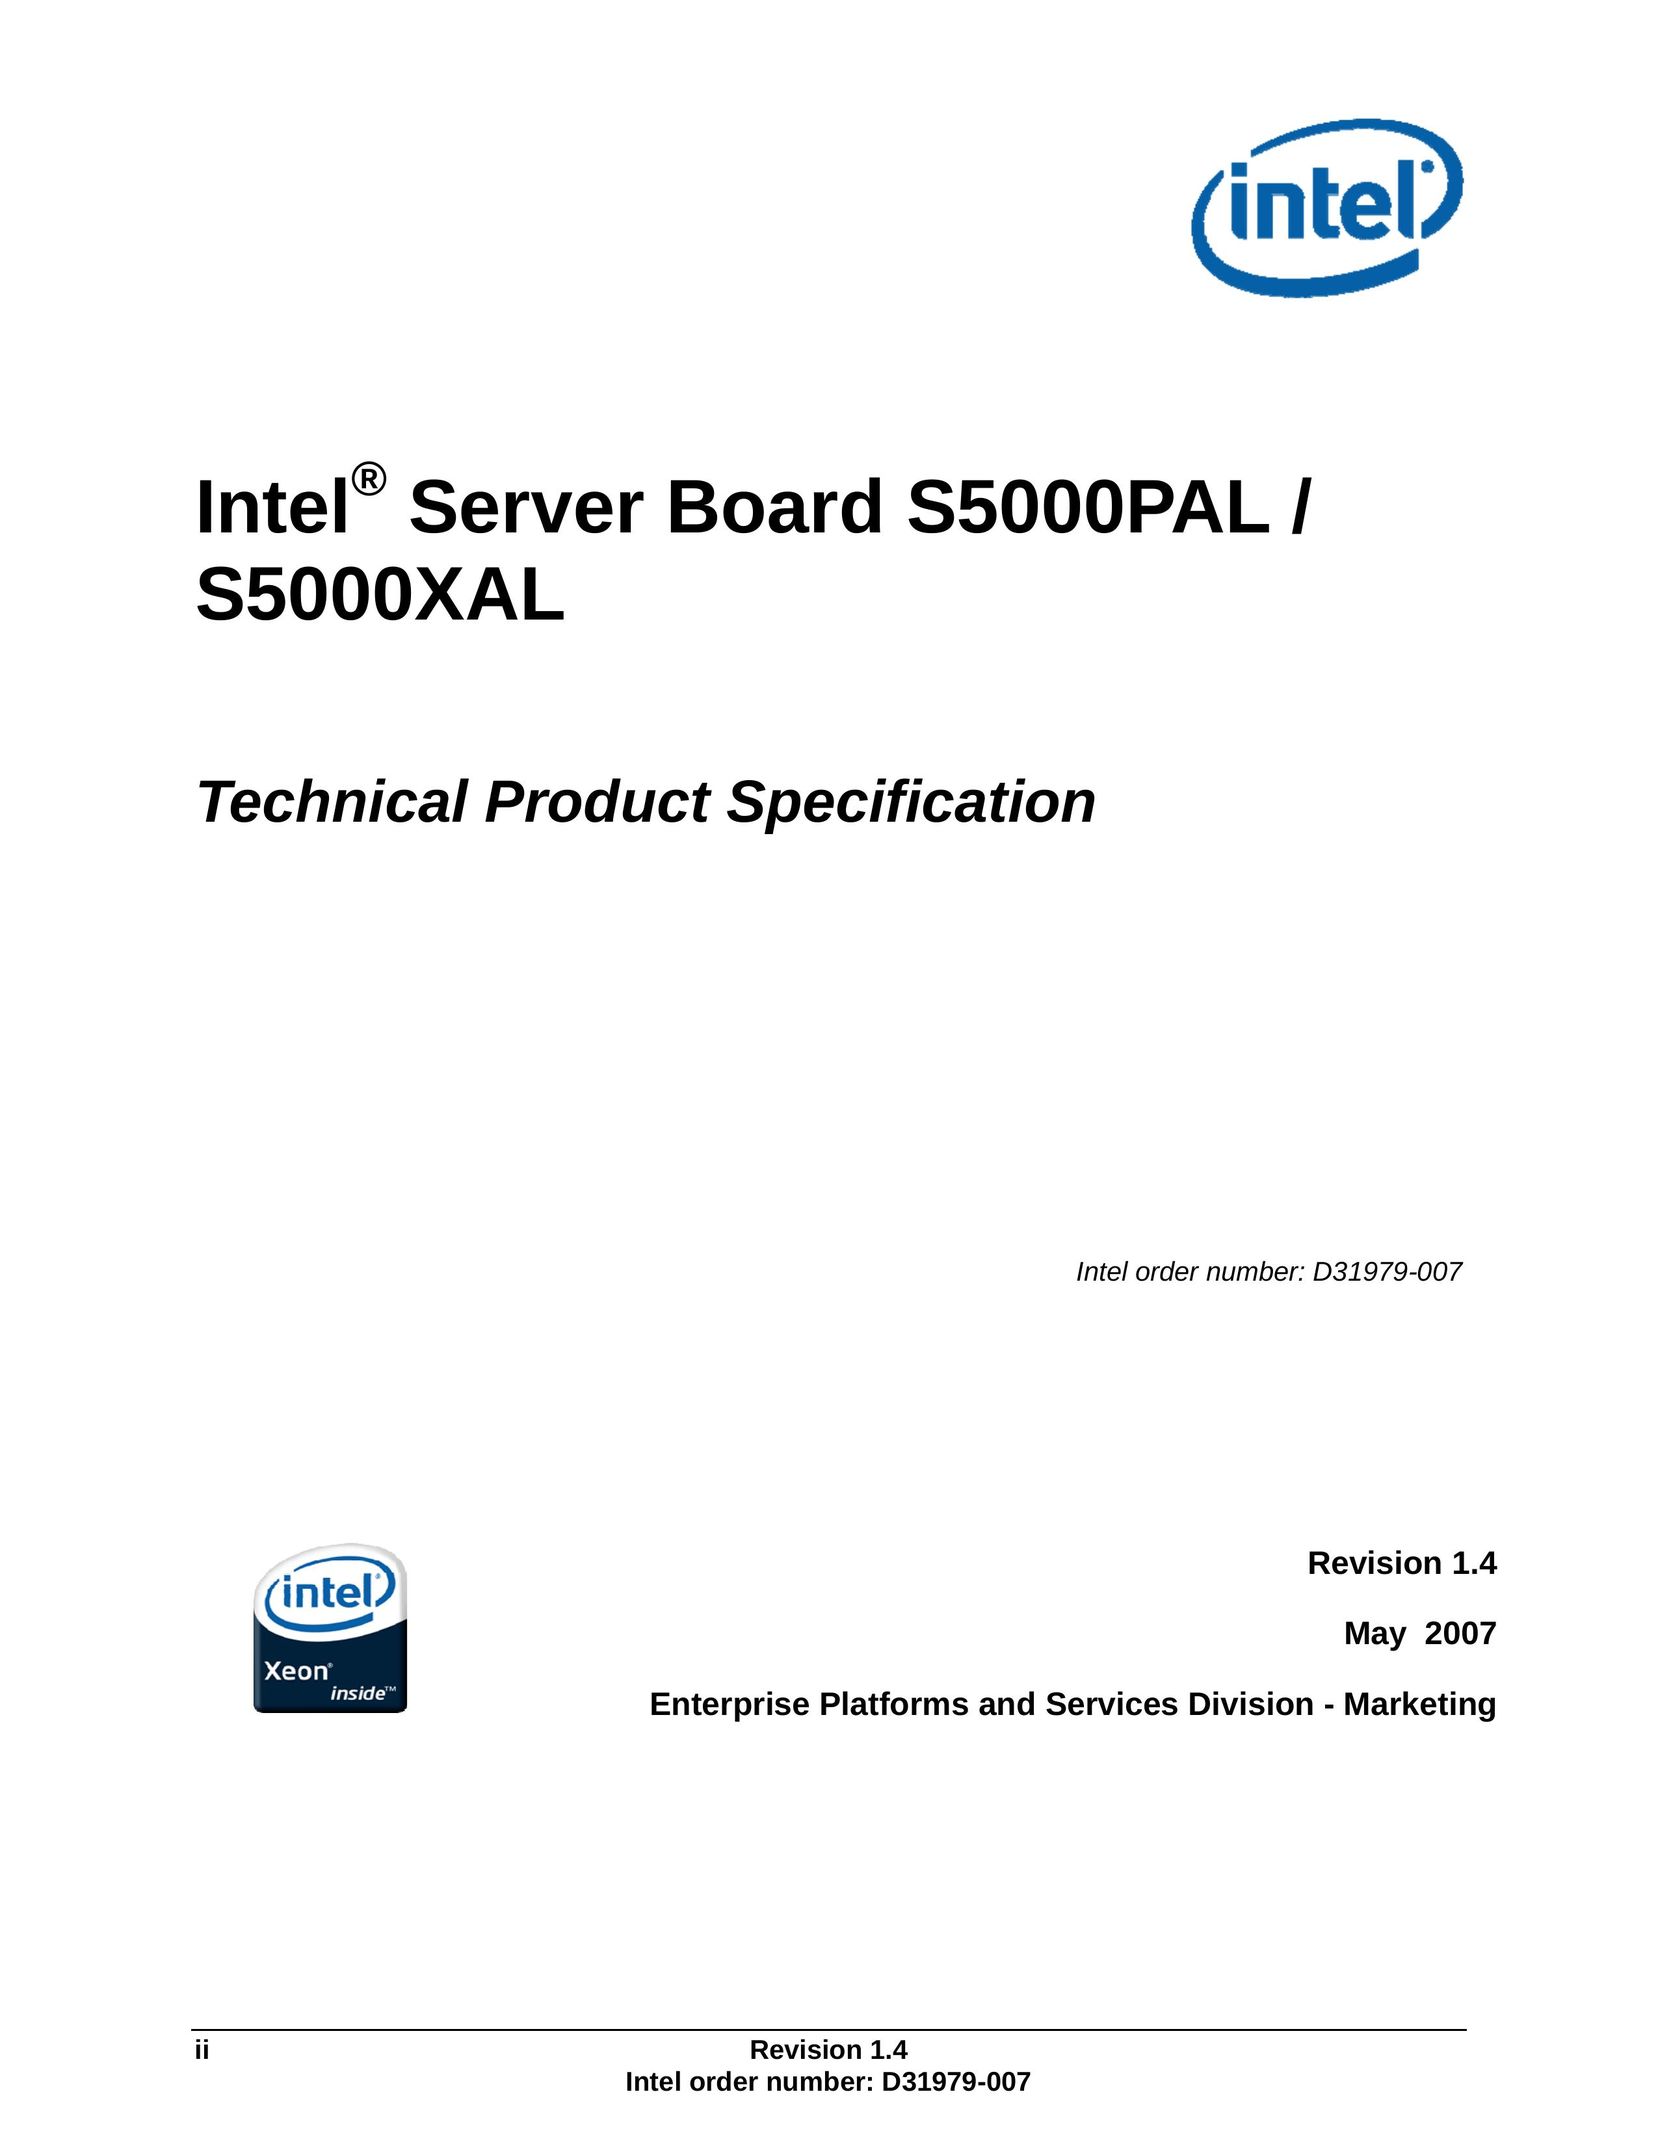 Intel S5000XAL Server User Manual